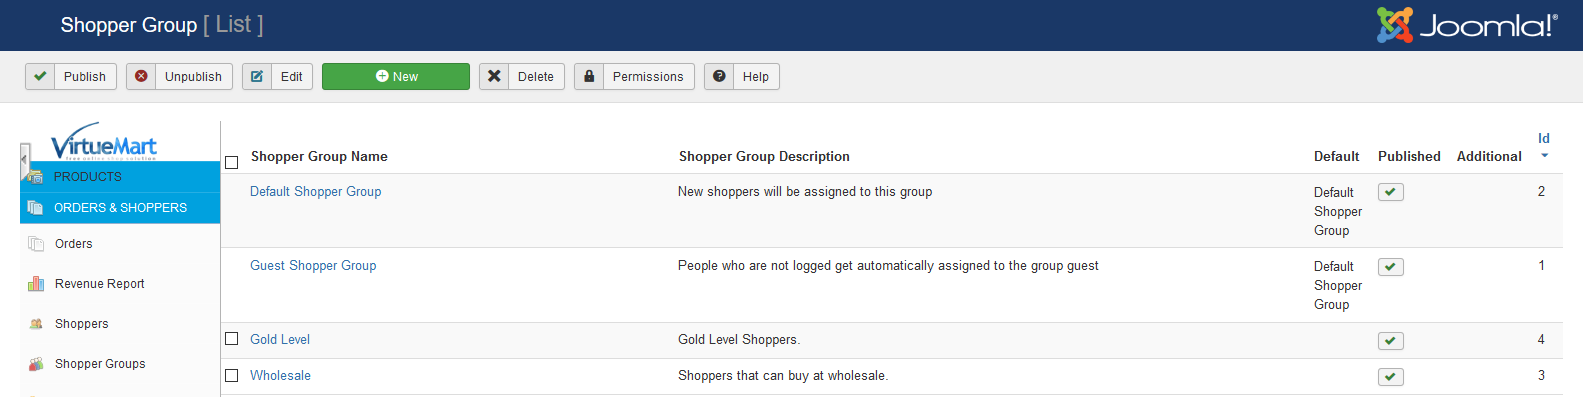 shoppergroups shoppergroup list screen